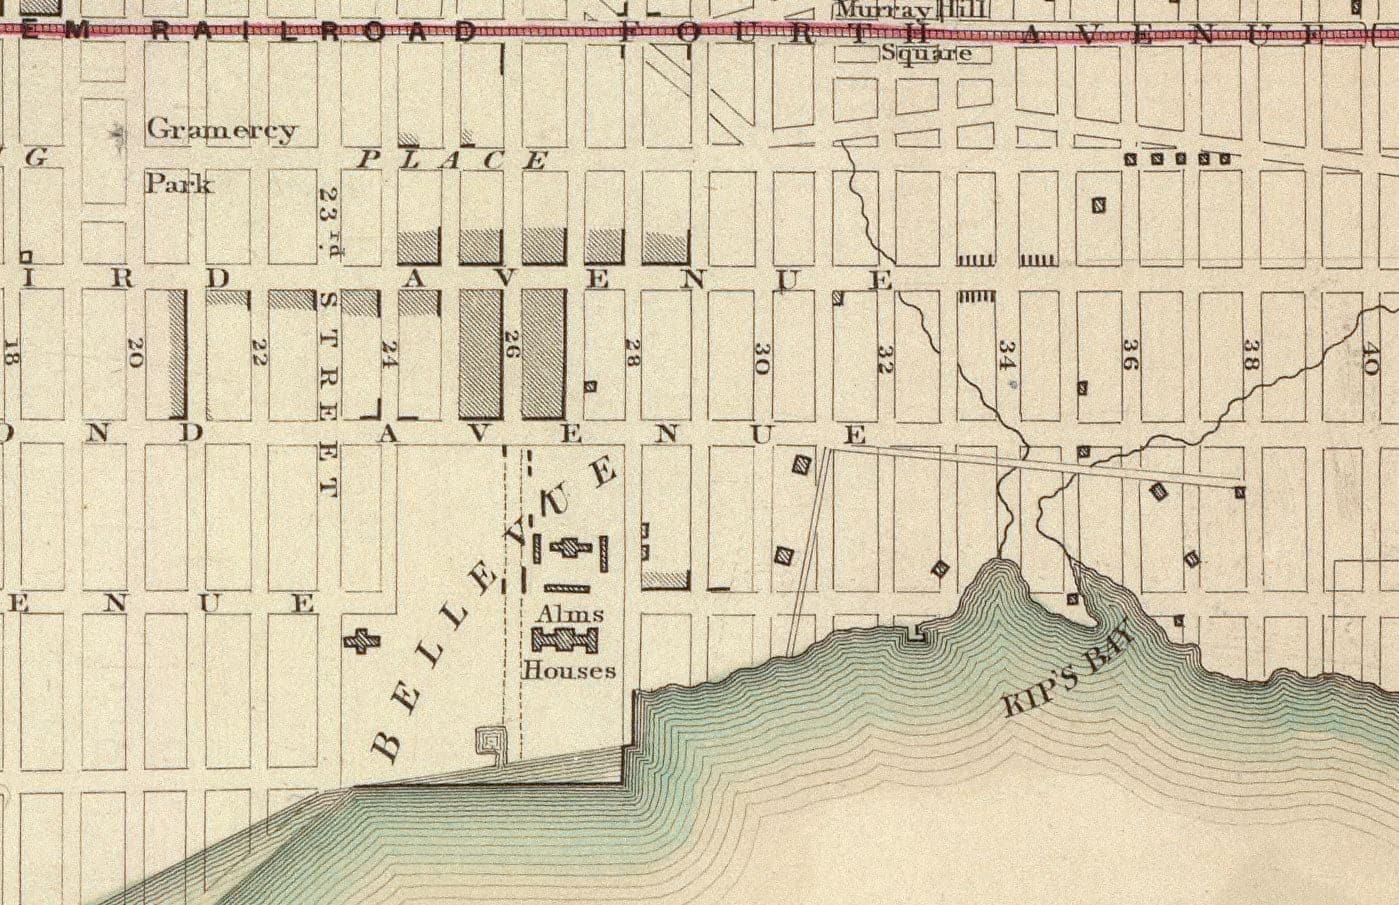 Old Map of New York, USA in 1840 - Manhattan, Brooklyn, Williamsburg, Hudson River